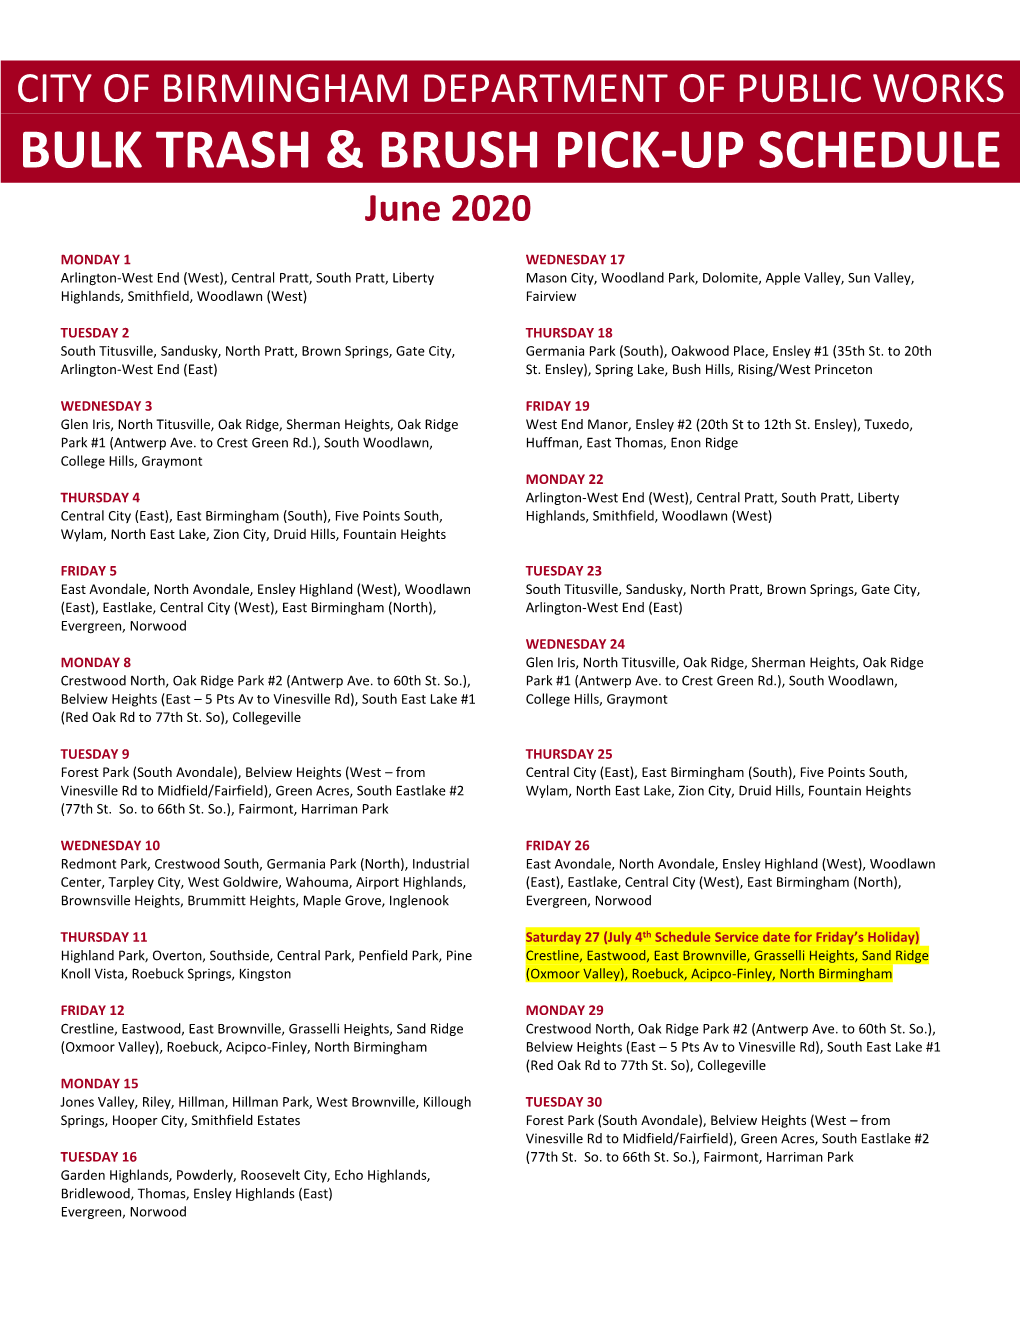 Bulk Trash & Brush Pick-Up Schedule